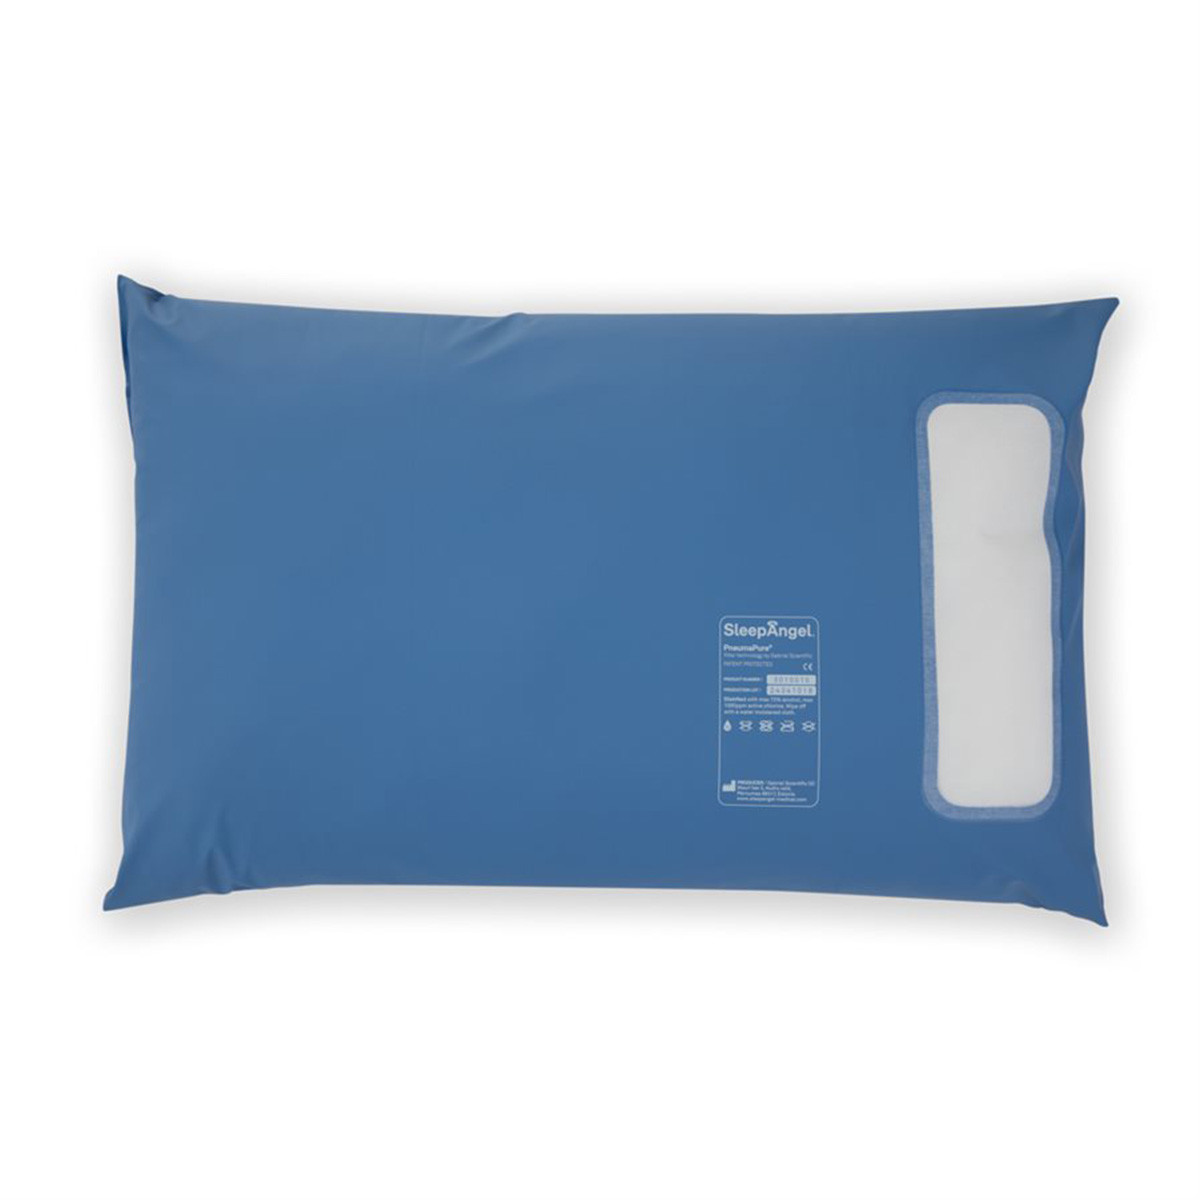 SleepAngel Medical Pillow - Express Range